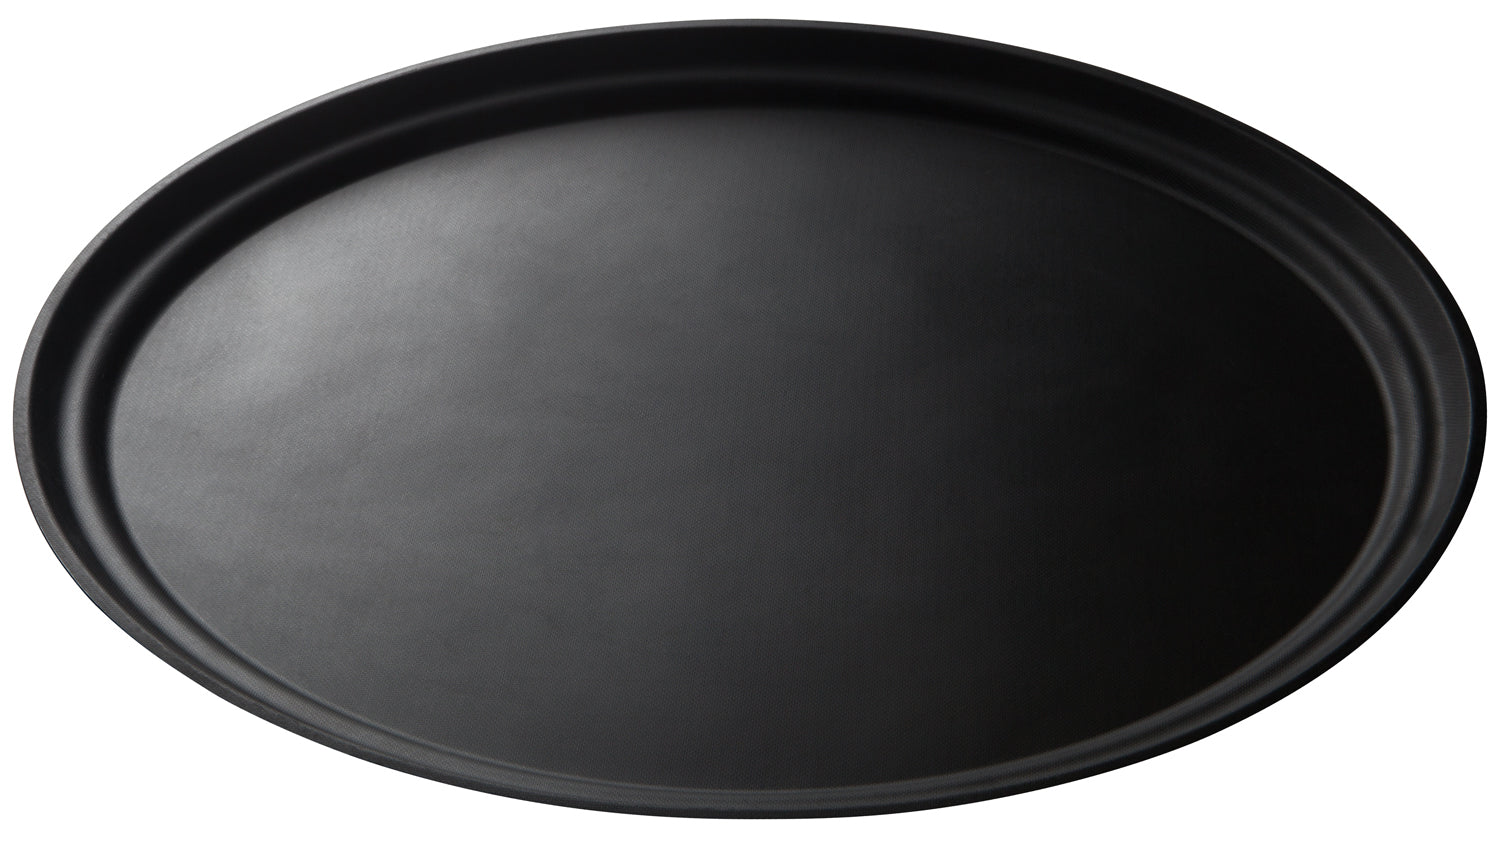 Cambro Camtread® Fiberglass Tablett mit rutschfester Gummioberfläche, oval – niedriges Profil 73,5 x 60,02 cm, 6 Stück im Karton- 2900CT110